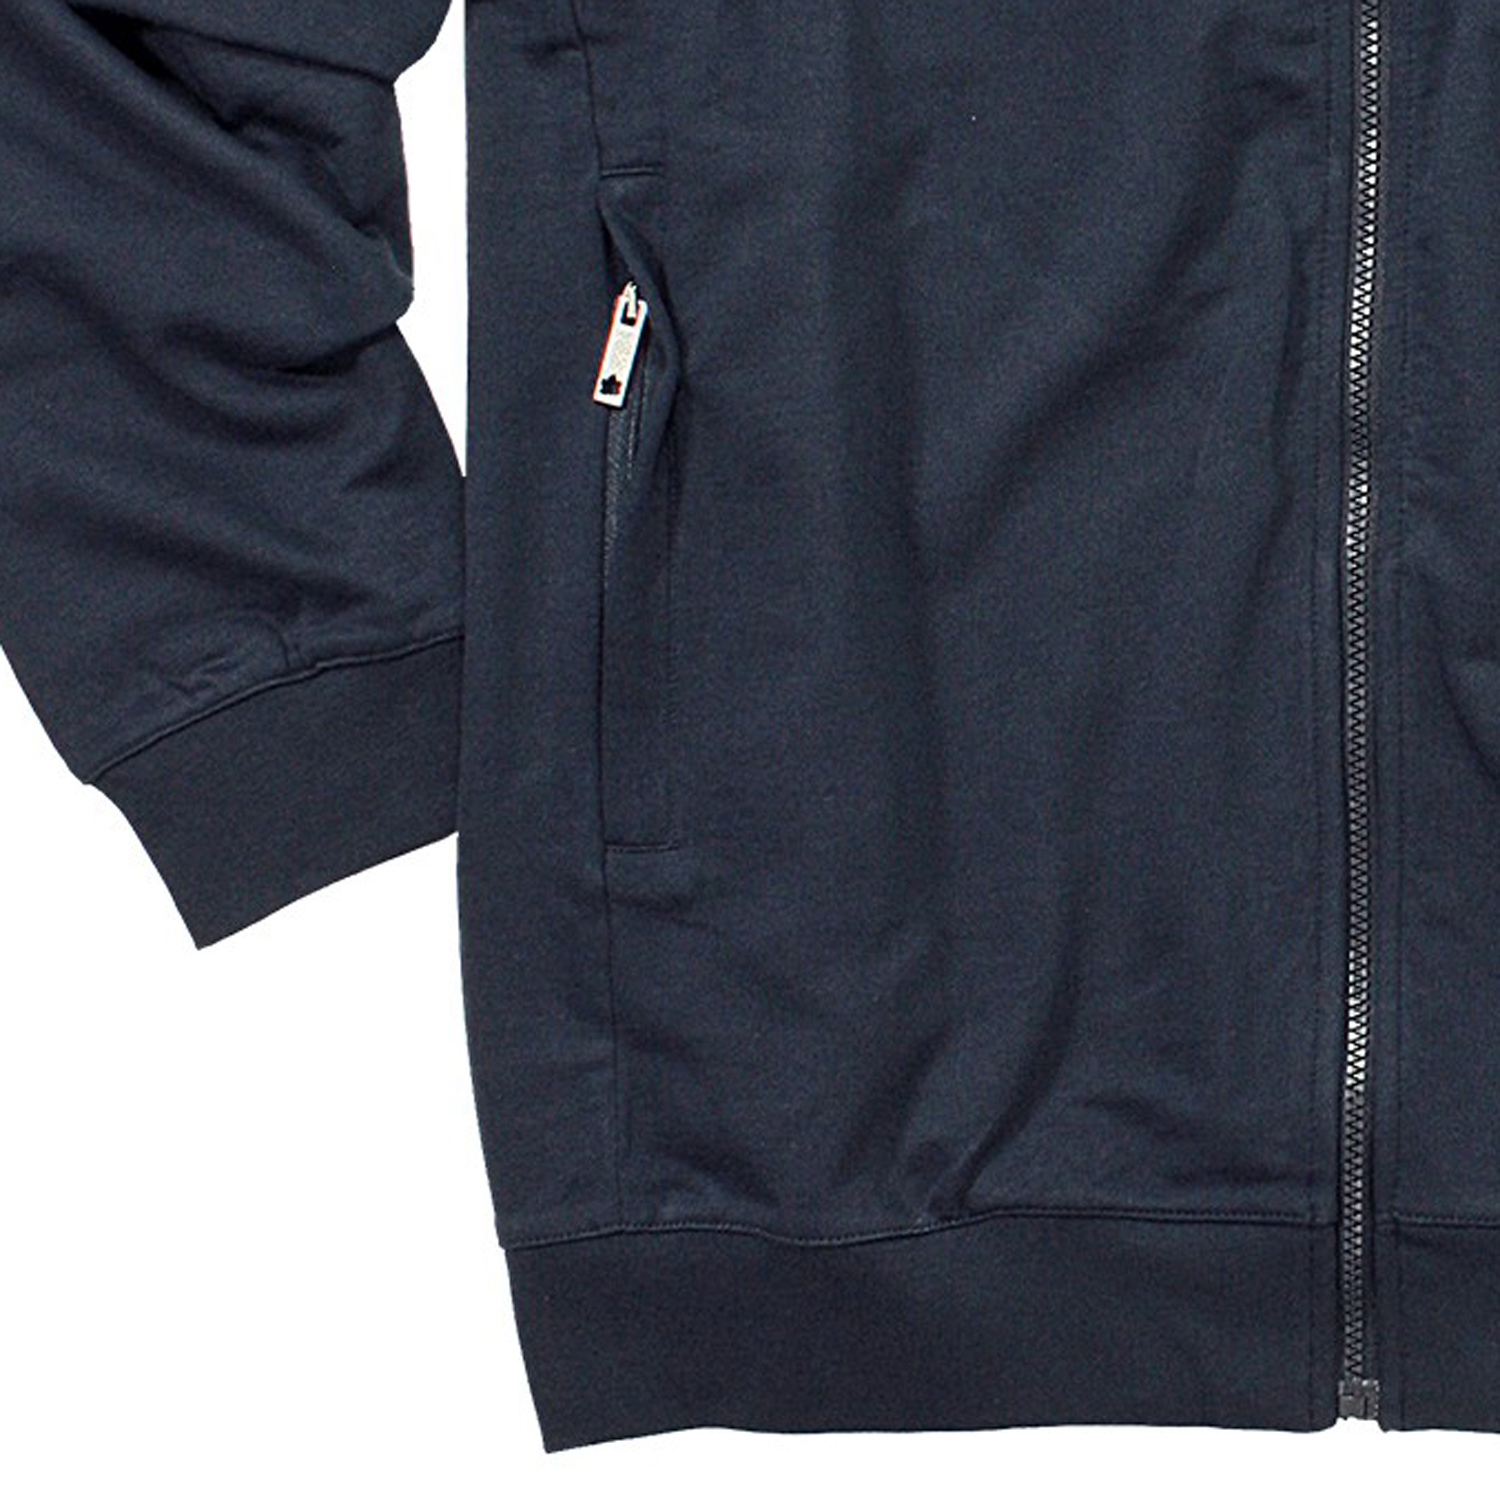 Sweat jacket in dark blue by Ahorn Sportswear up to oversize 10XL